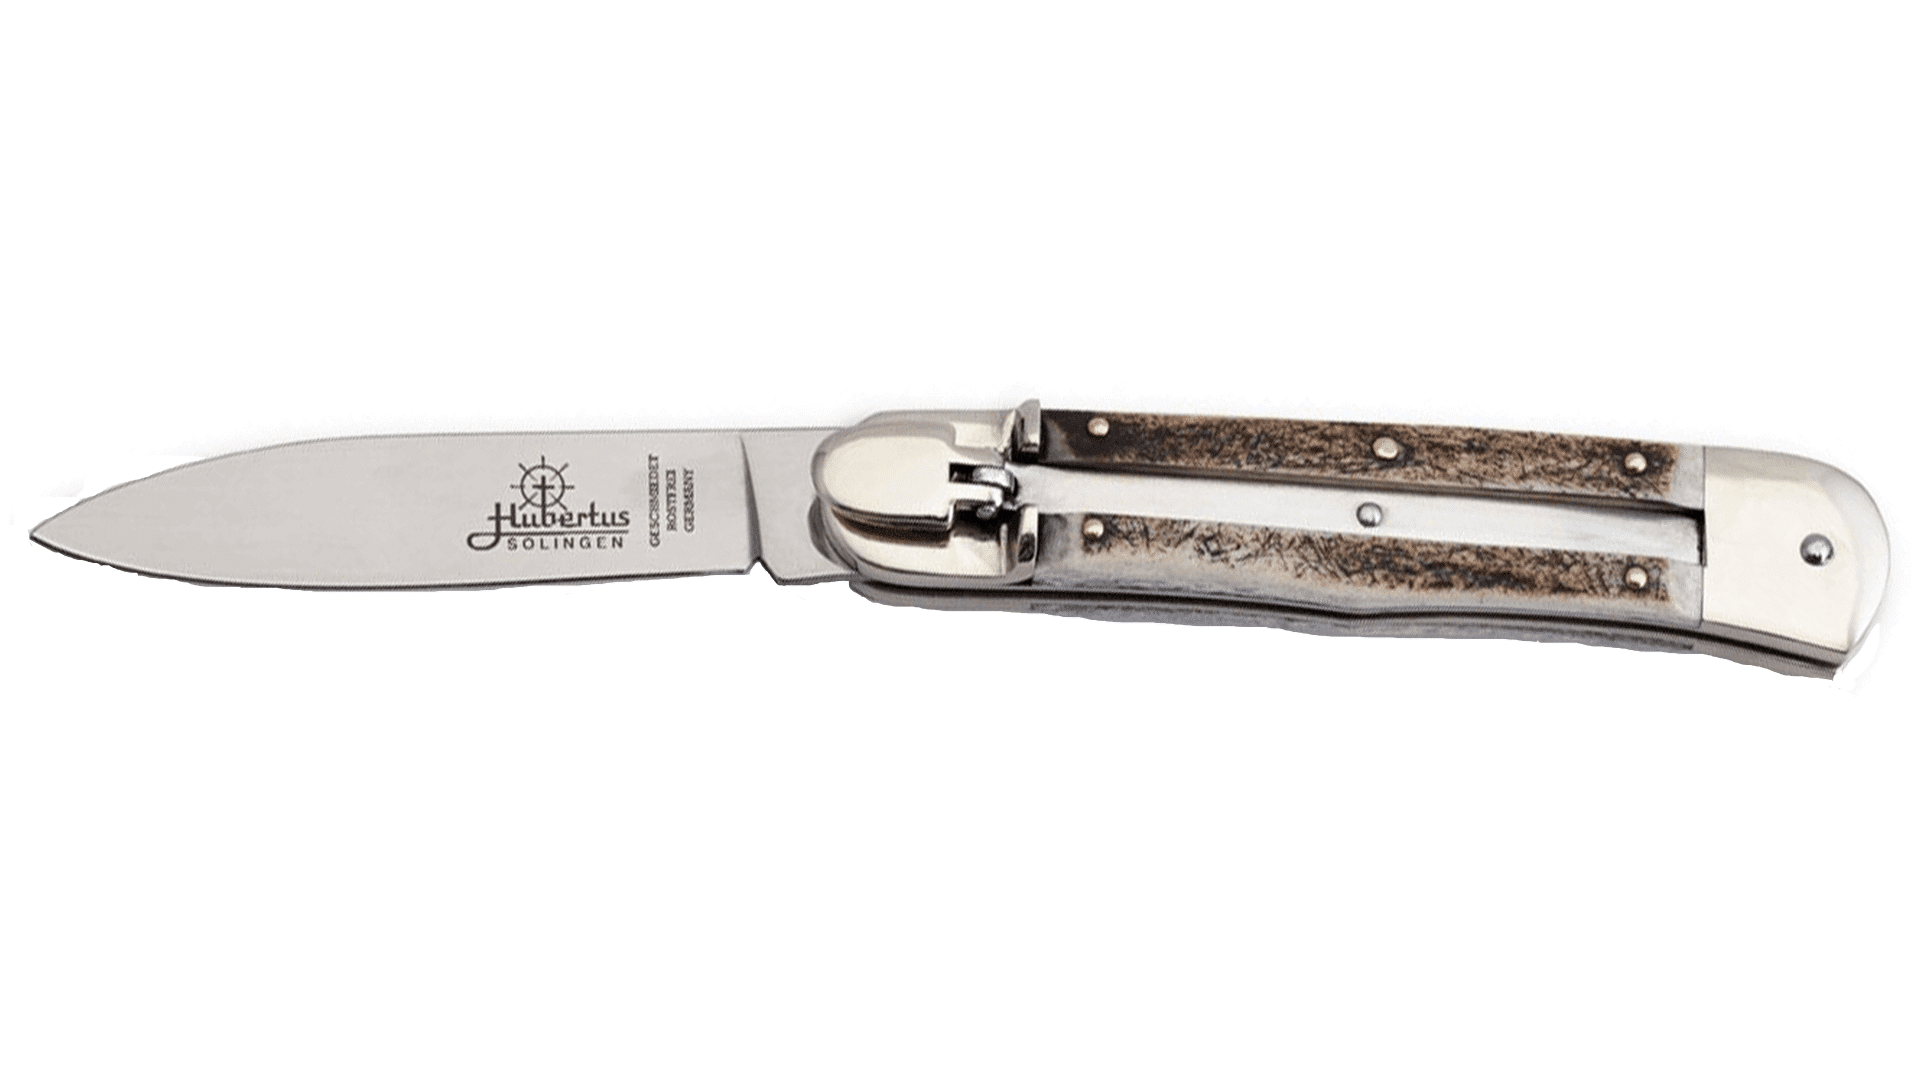 Otter Mercator brass damask - knife sales company Rottner